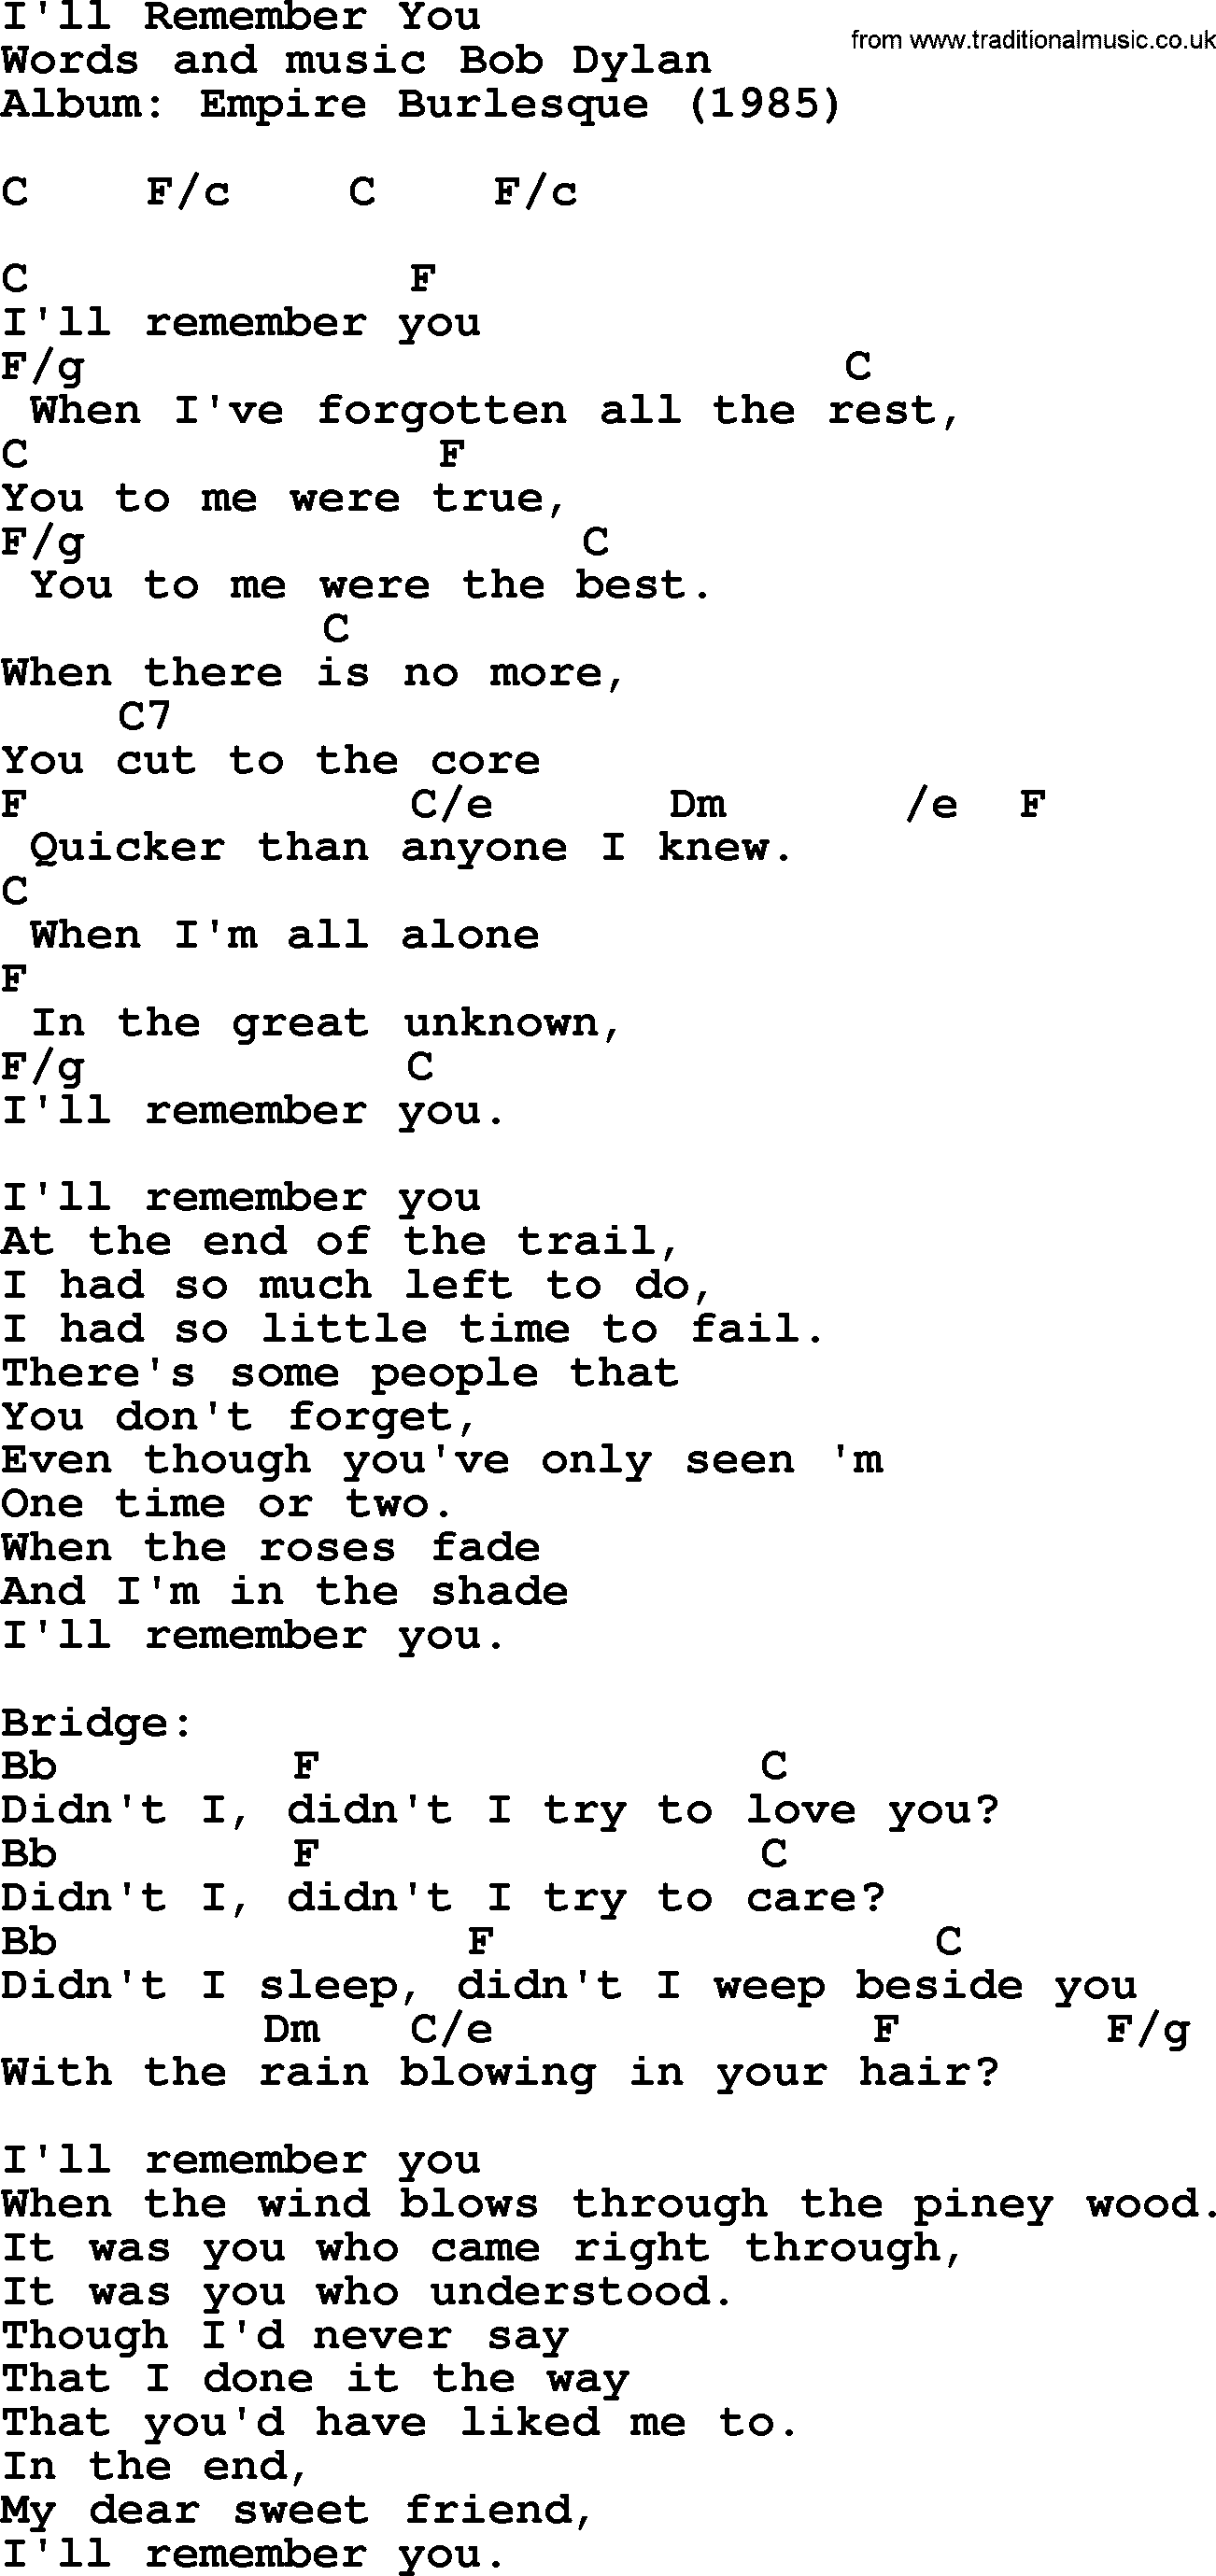 Bob Dylan song, lyrics with chords - I'll Remember You